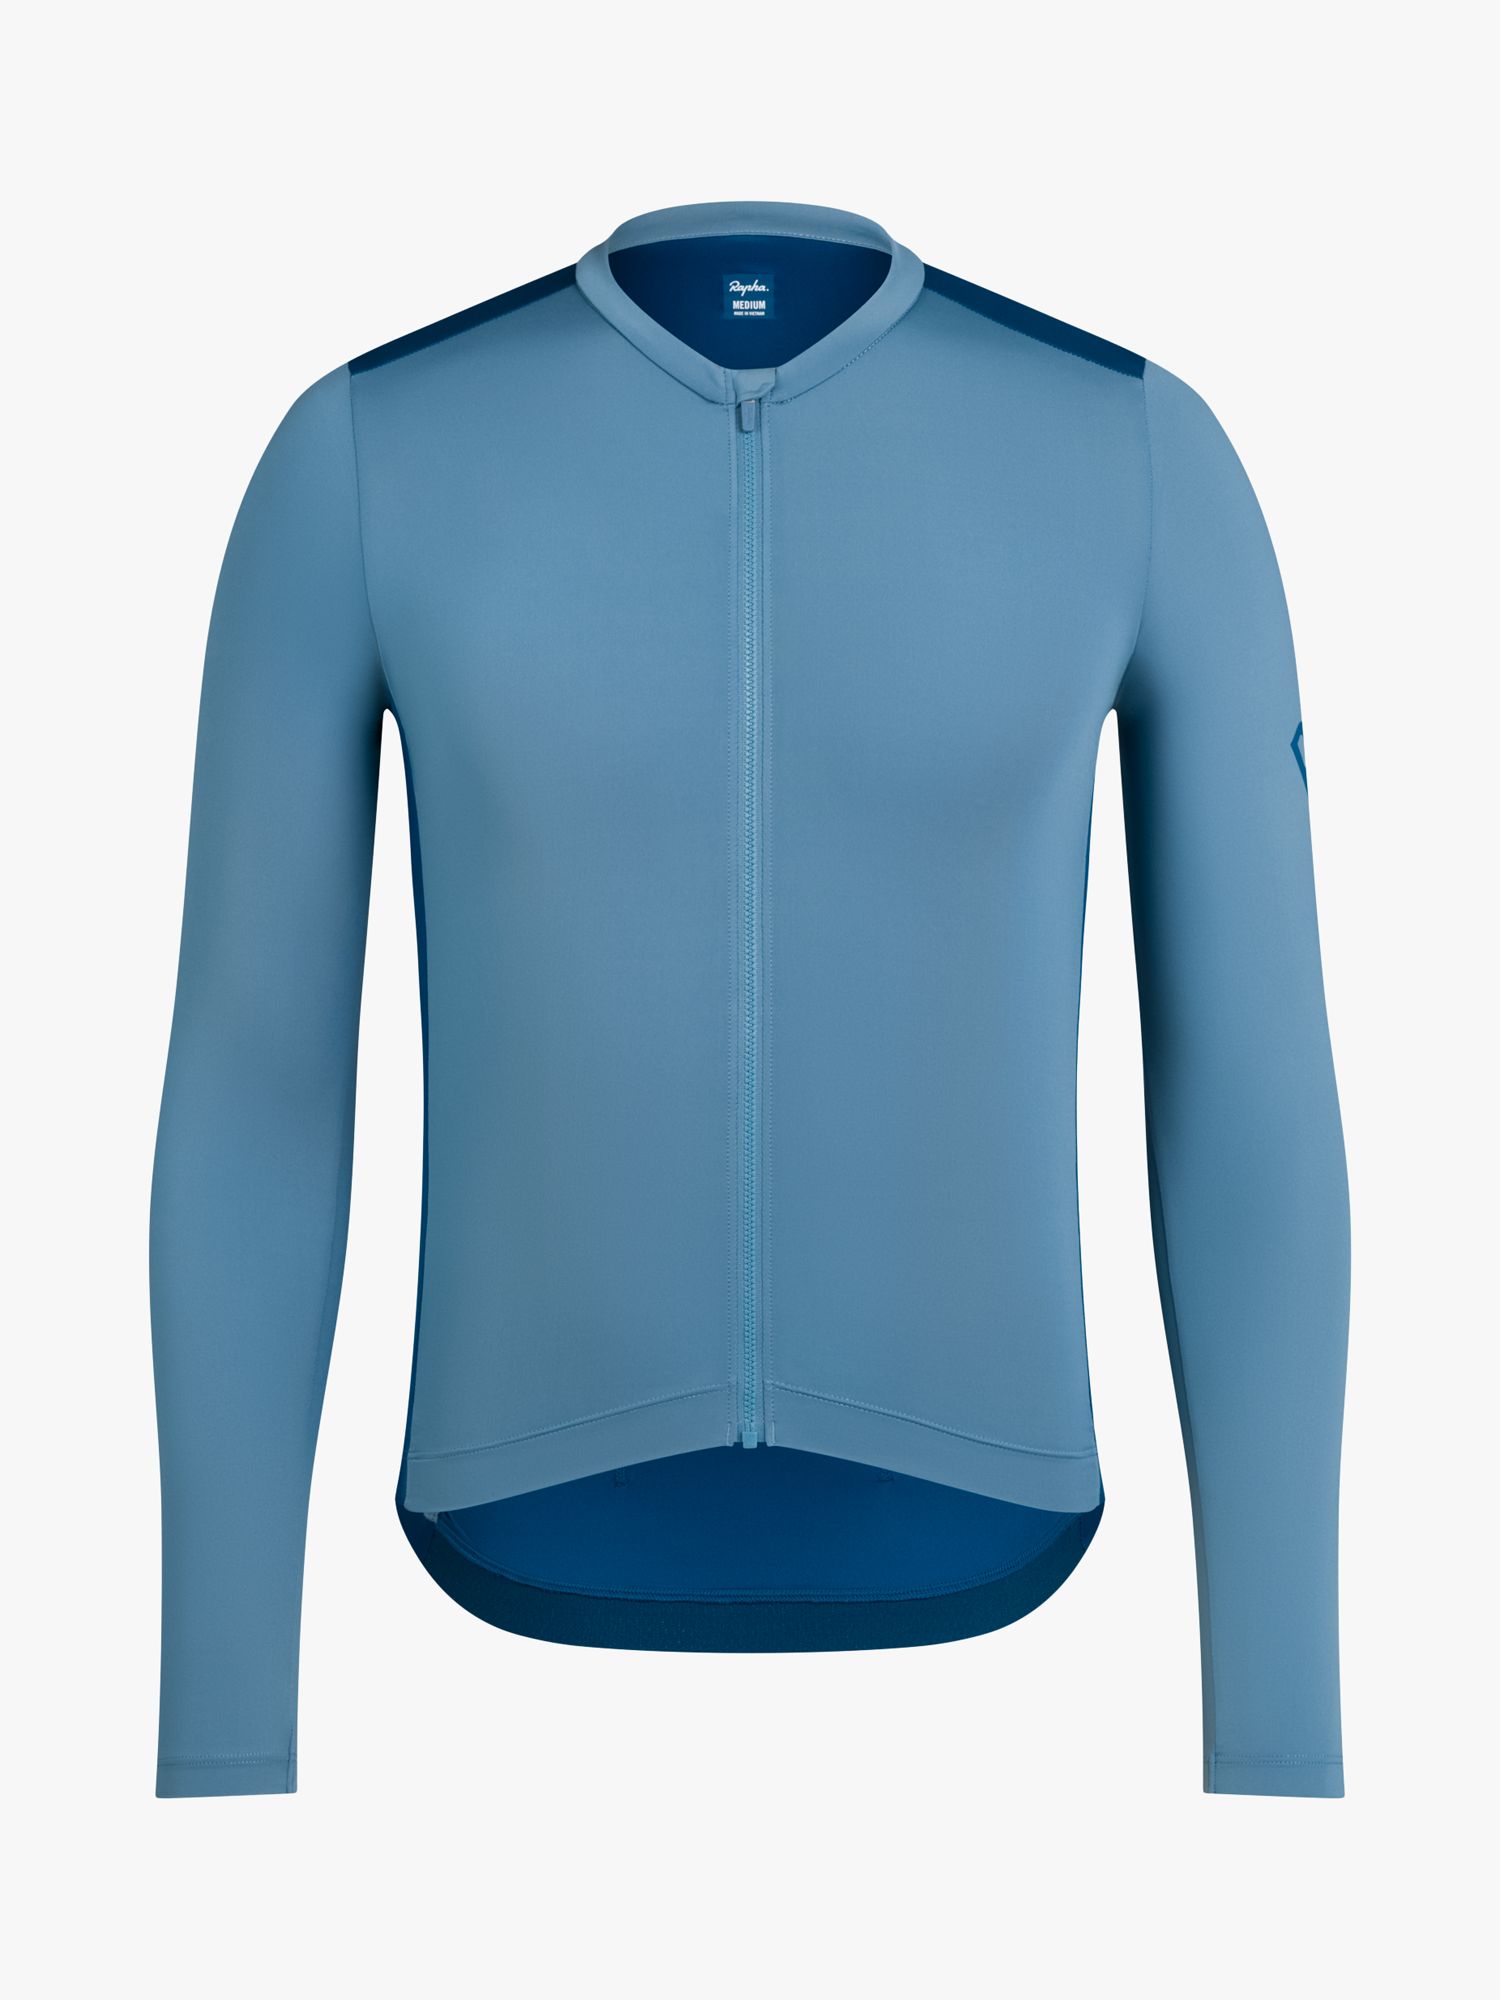 Rapha Pro Long Sleeve Cycling Top, Blue Mid, L